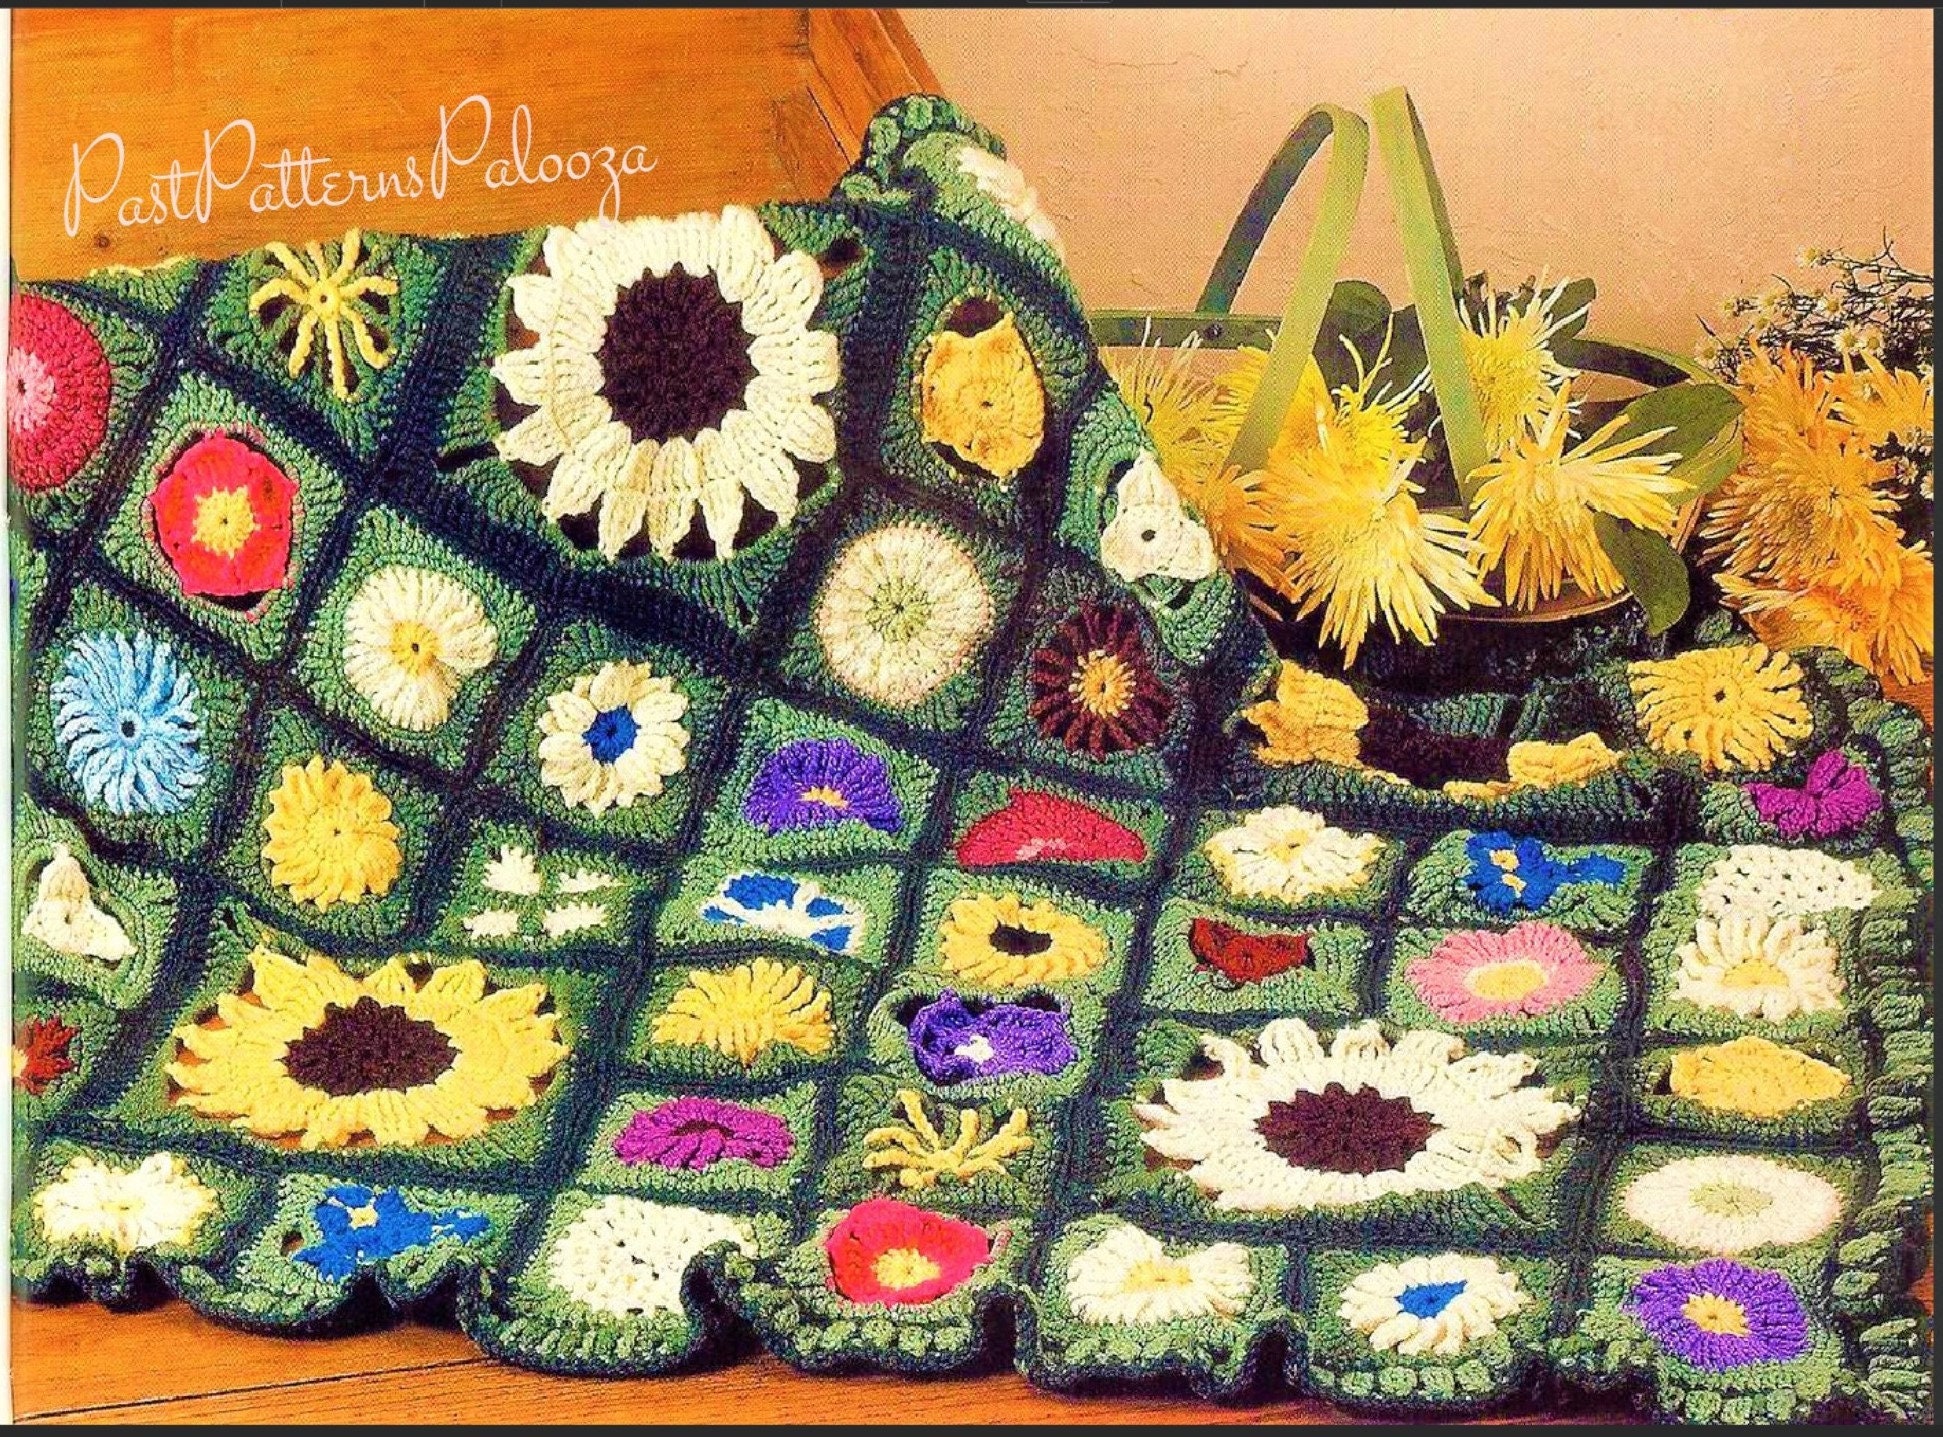 Charleston Garden Flower Afghan Crochet Pattern is 53 x 76